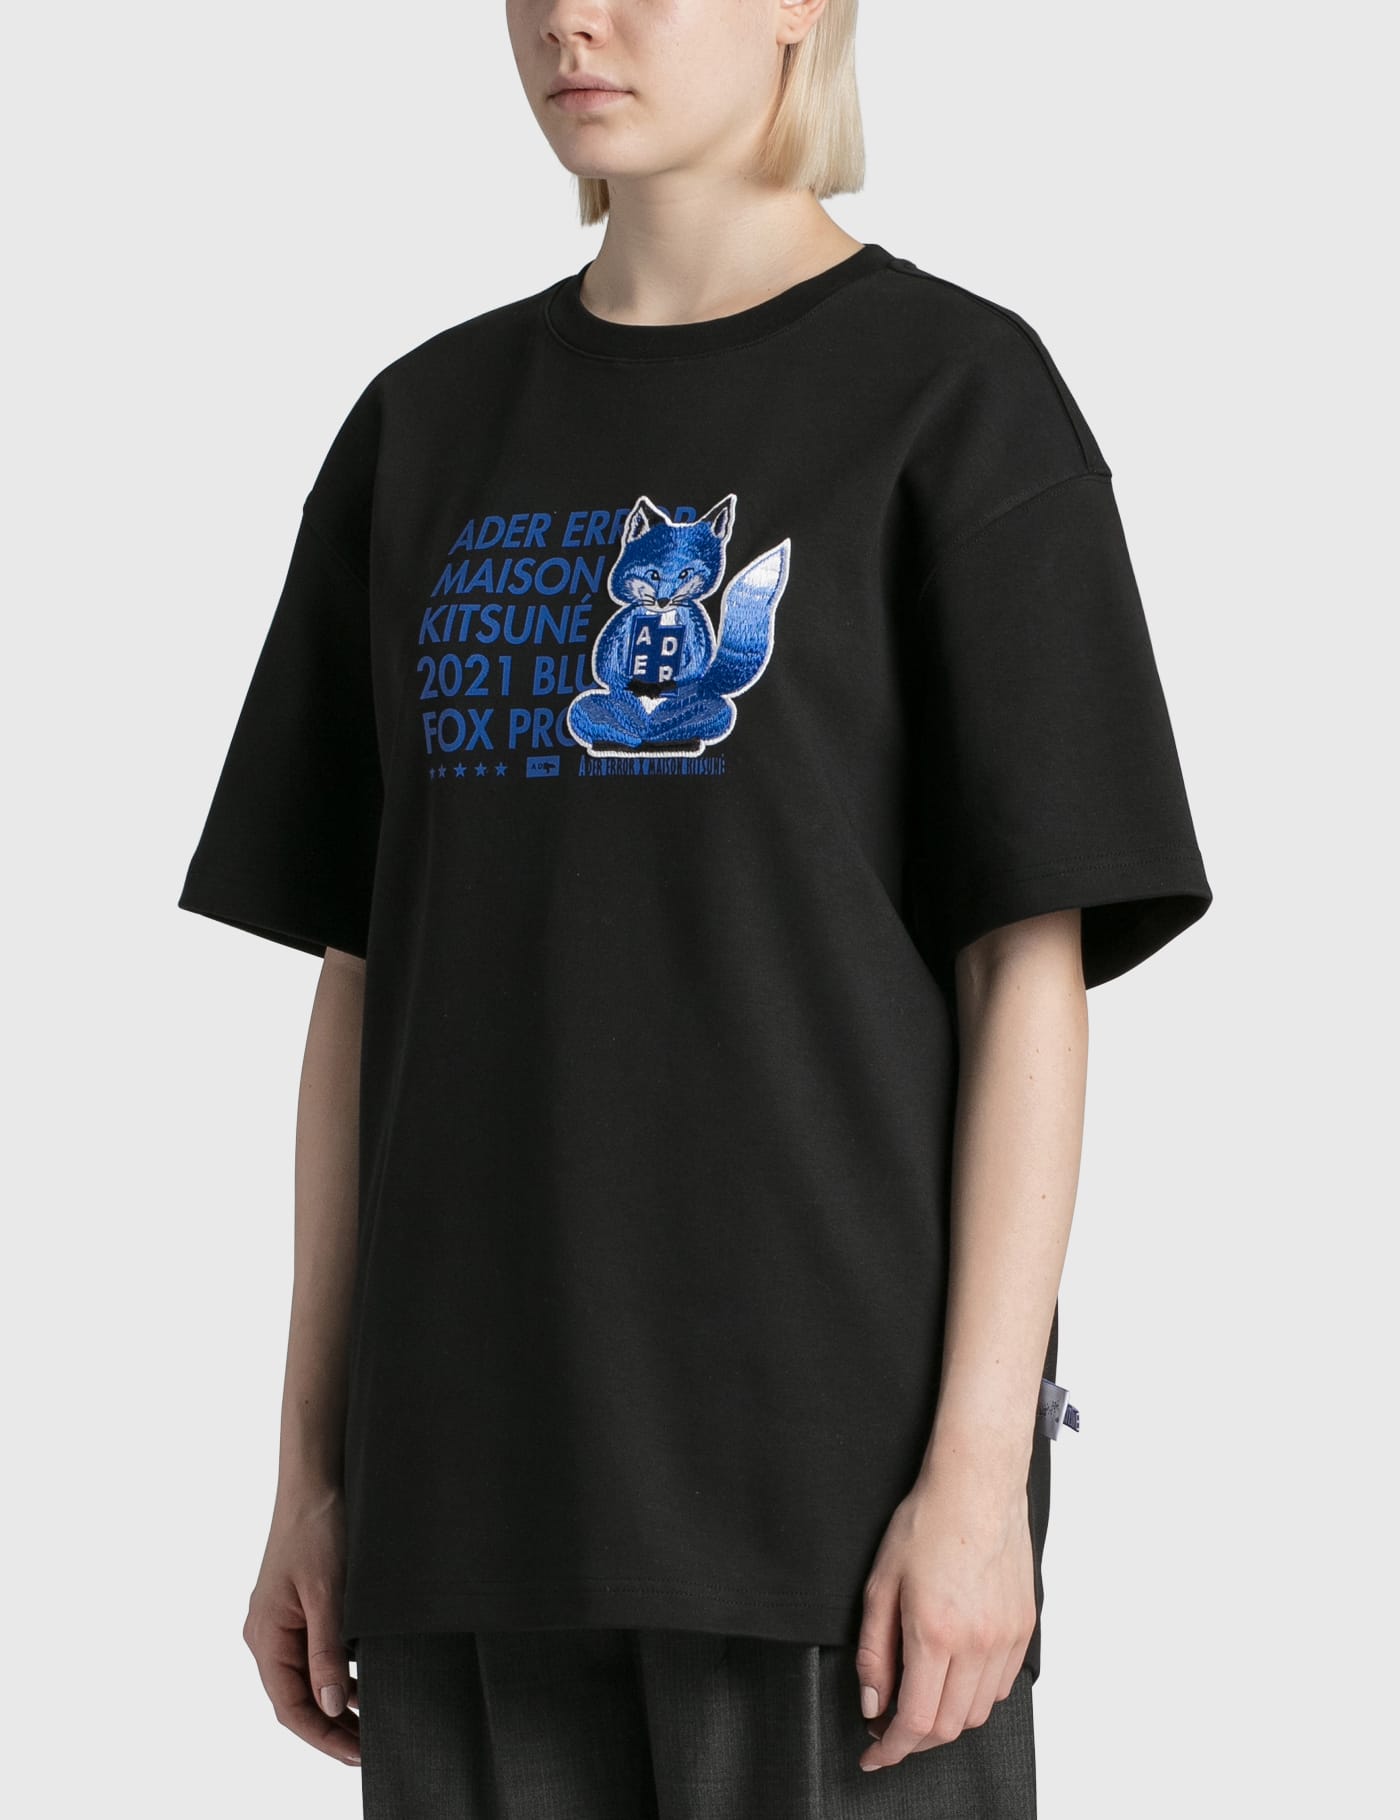 Maison Kitsune - Maison Kitsuné x Ader Error Meditation Fox T-shirt | HBX -  Globally Curated Fashion and Lifestyle by Hypebeast